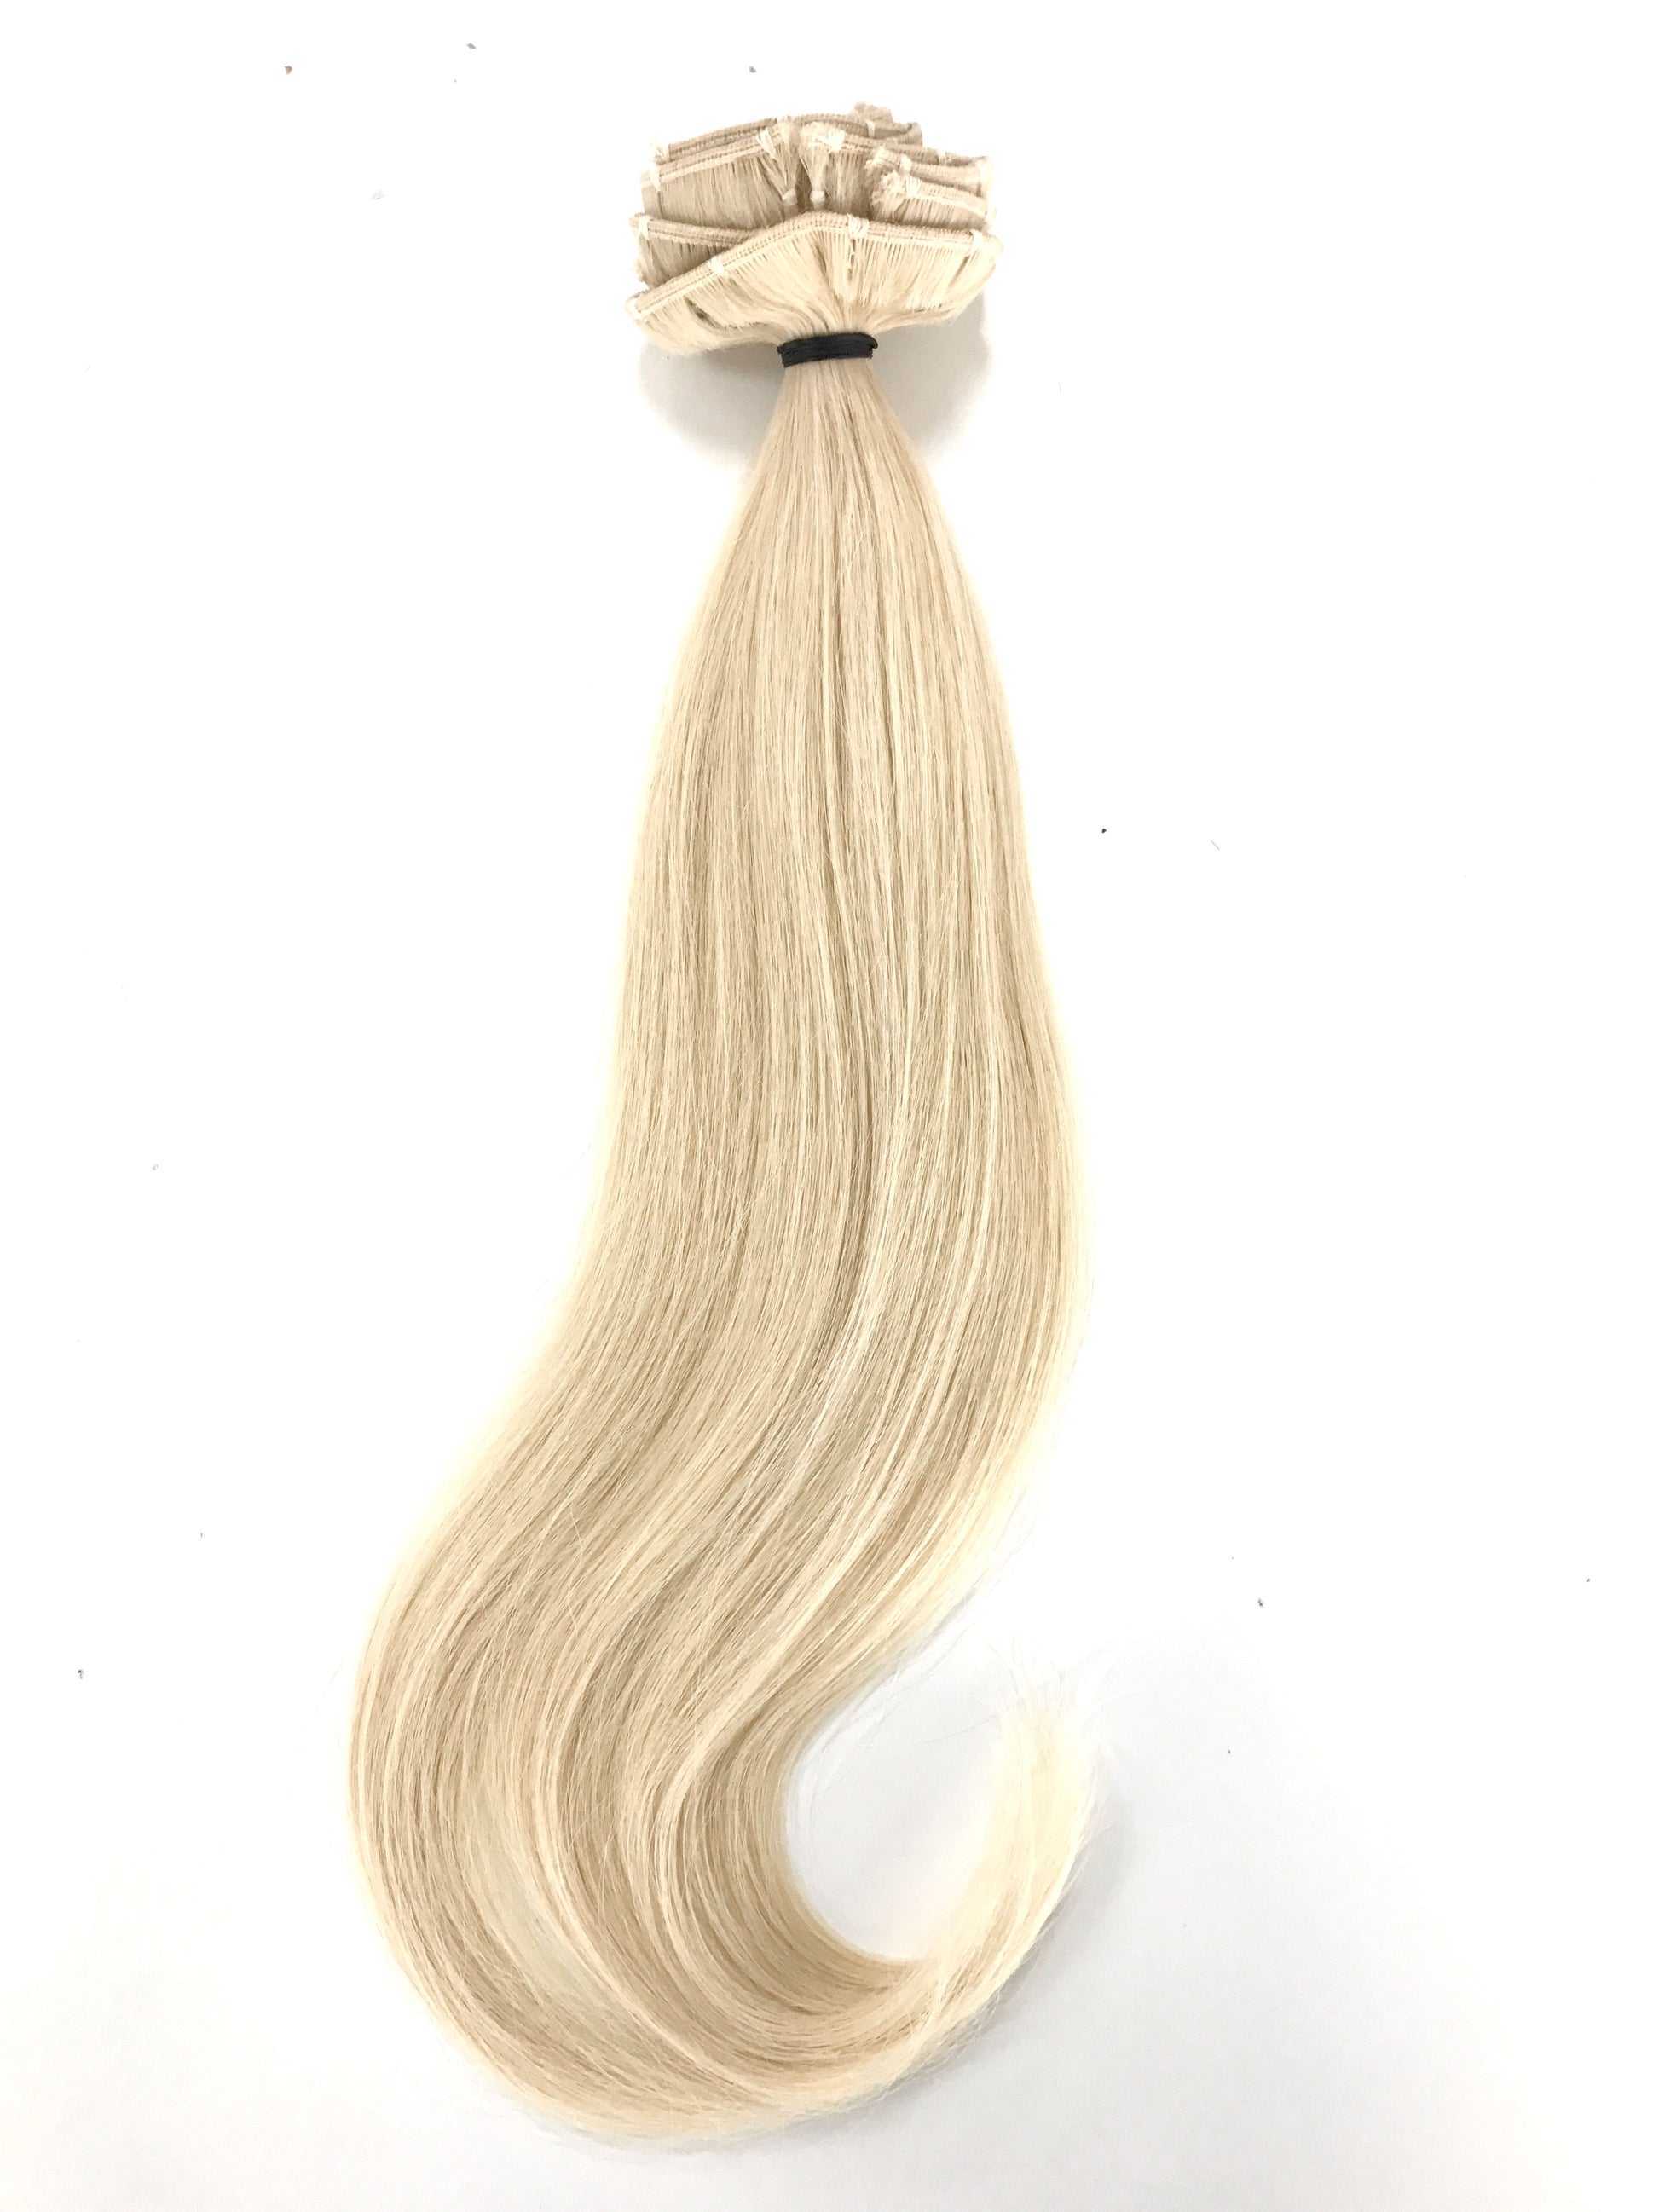 NEW! European Remy Human Hair, Clip In Extensions, 20", Colour 16, 100g-Virgin Hair & Beauty, The Best Hair Extensions, Real Virgin Human Hair.